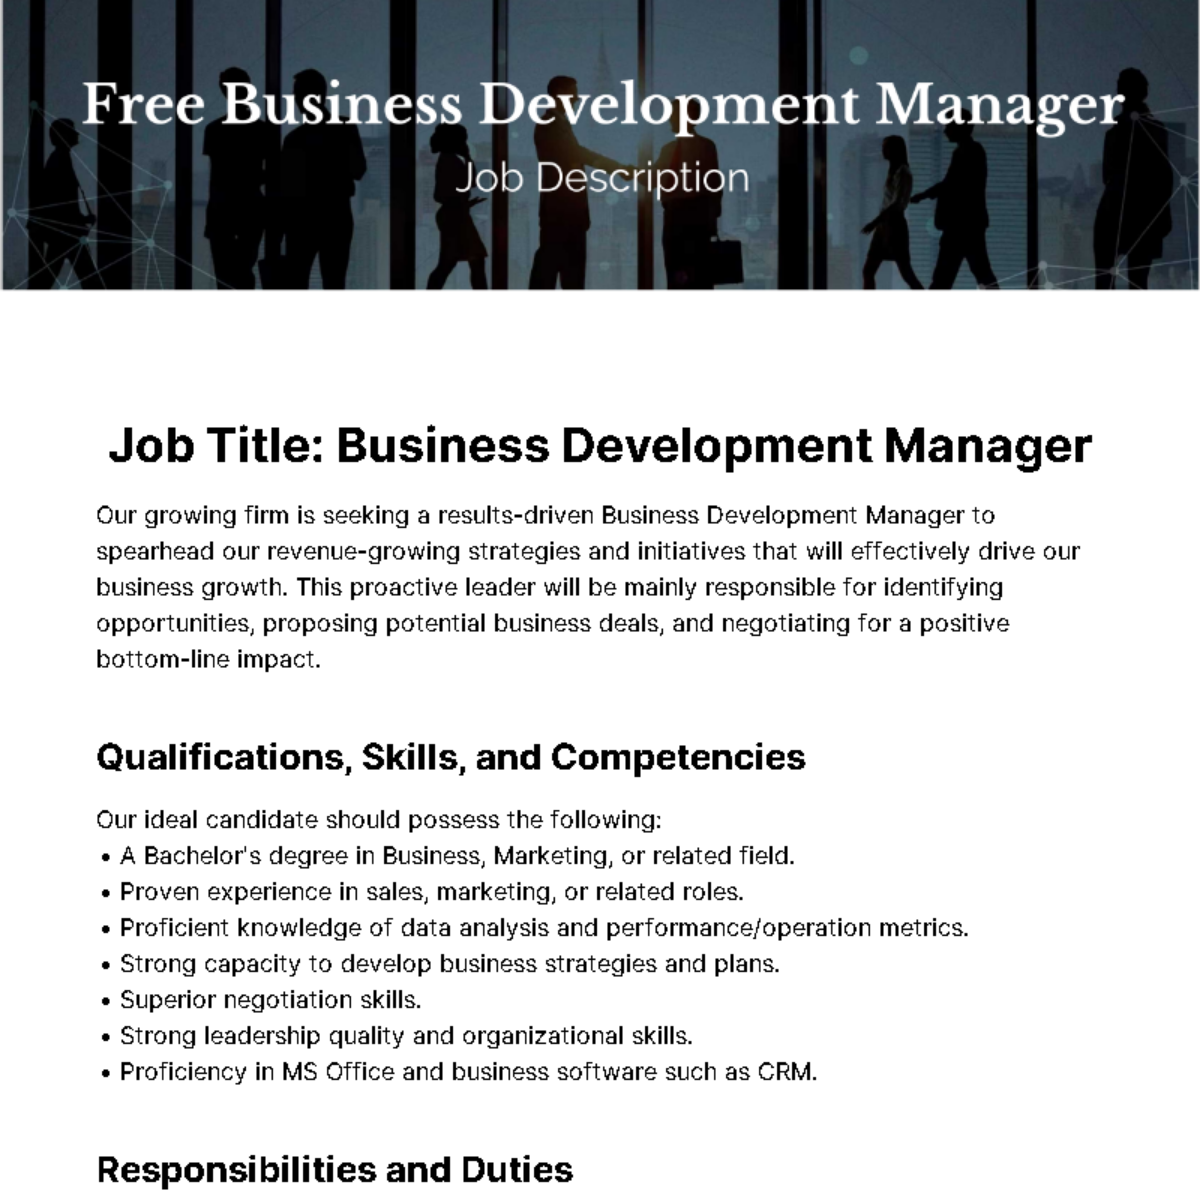 Free Business Development Manager Job Description Template